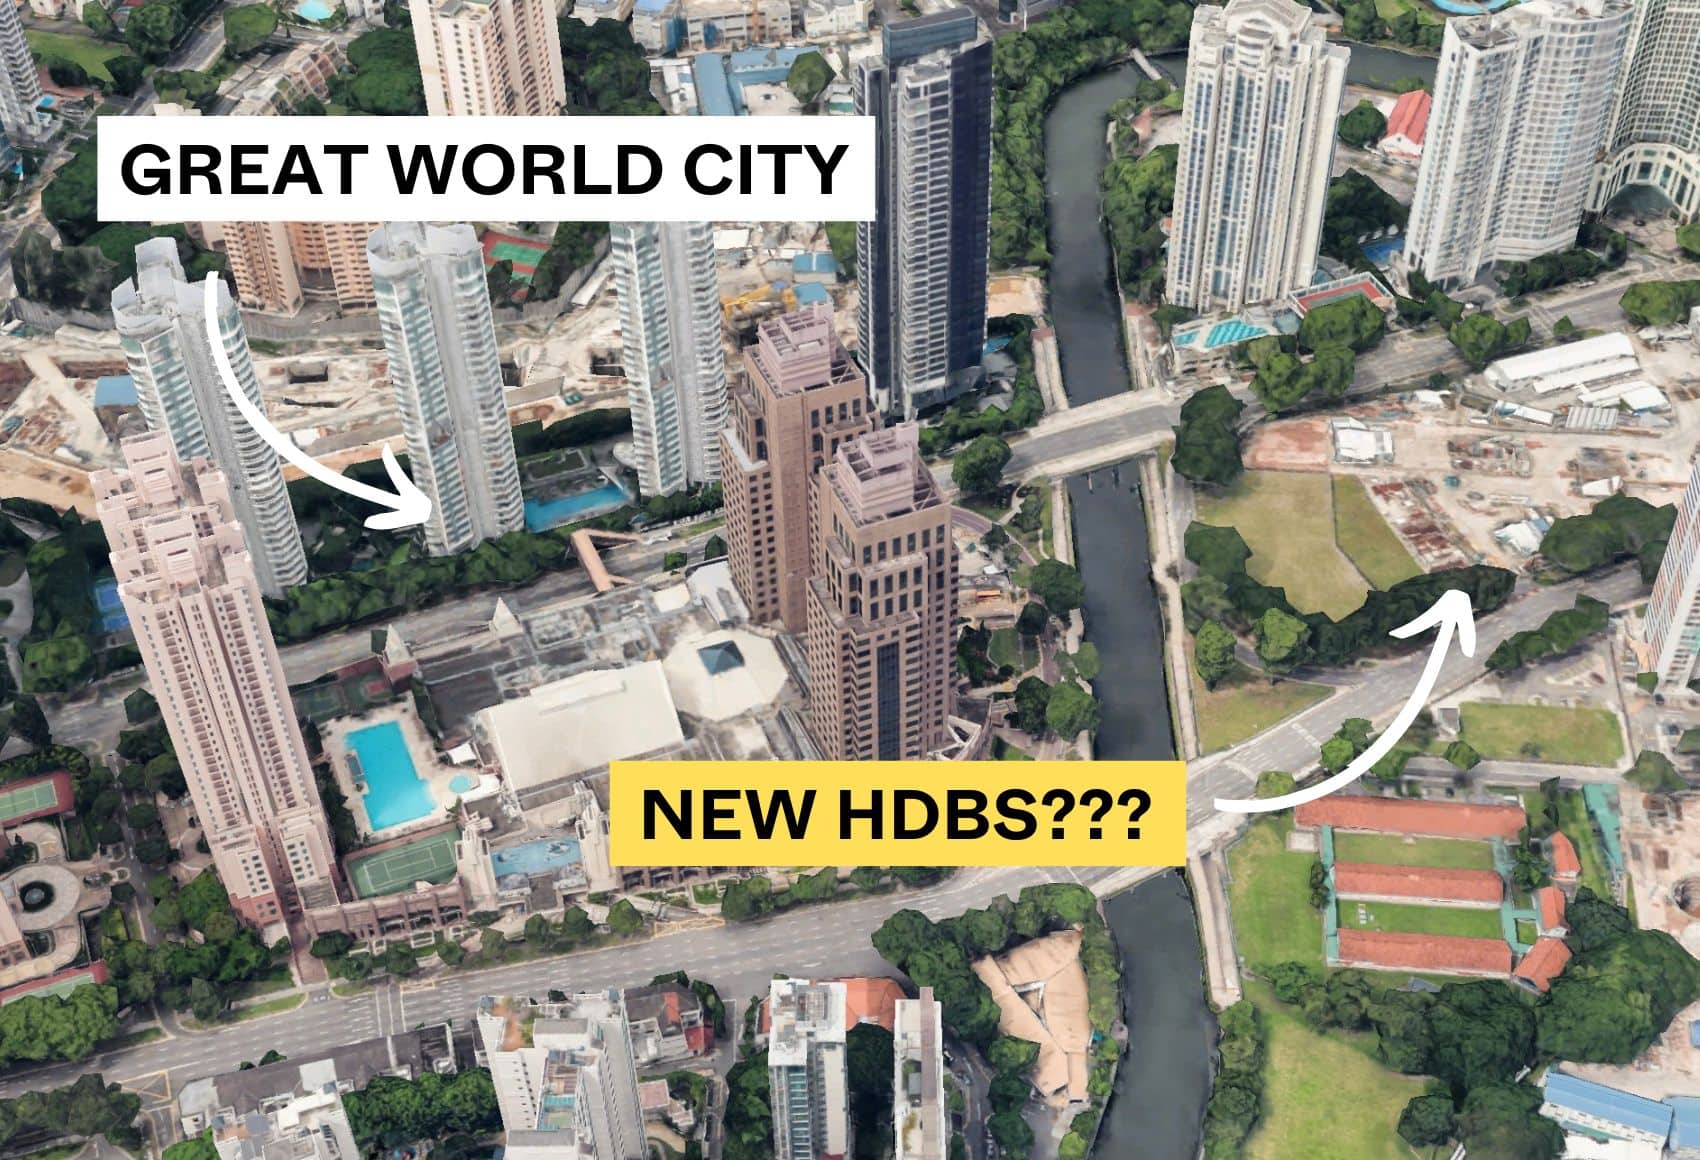 Great World City New HDBs